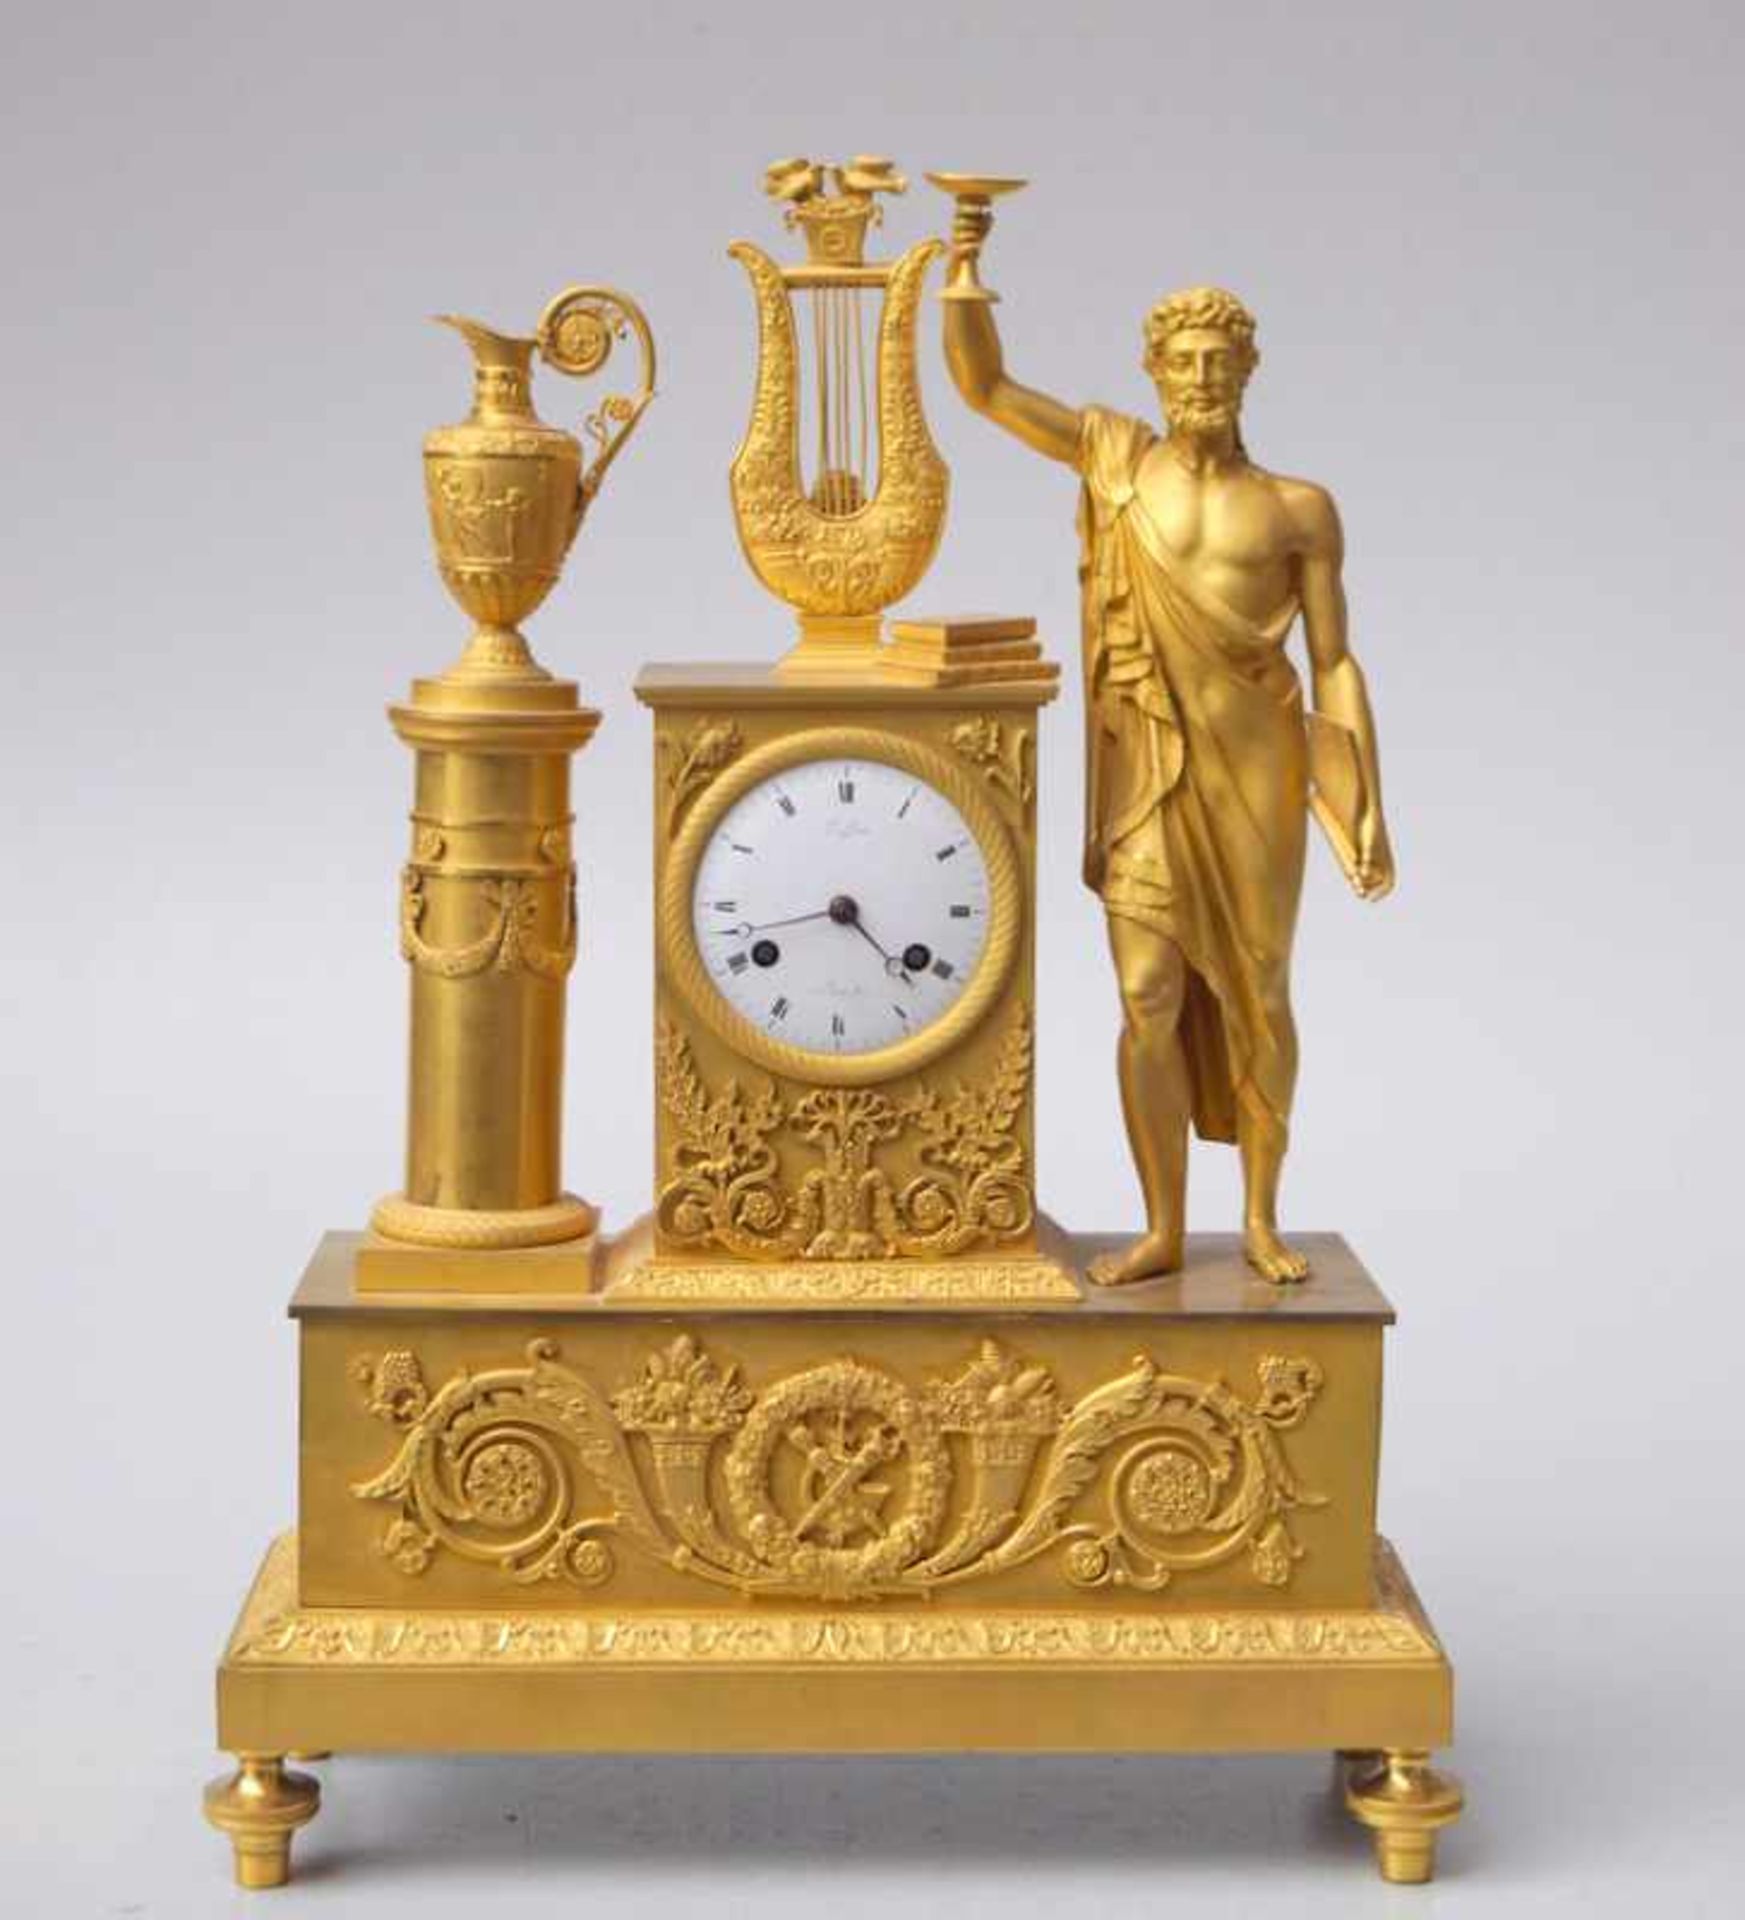 Le Clerk à Bruxelles: große, feuervergoldete Pendule des Empire, um 1820Gehäuse aus feuervergoldeter